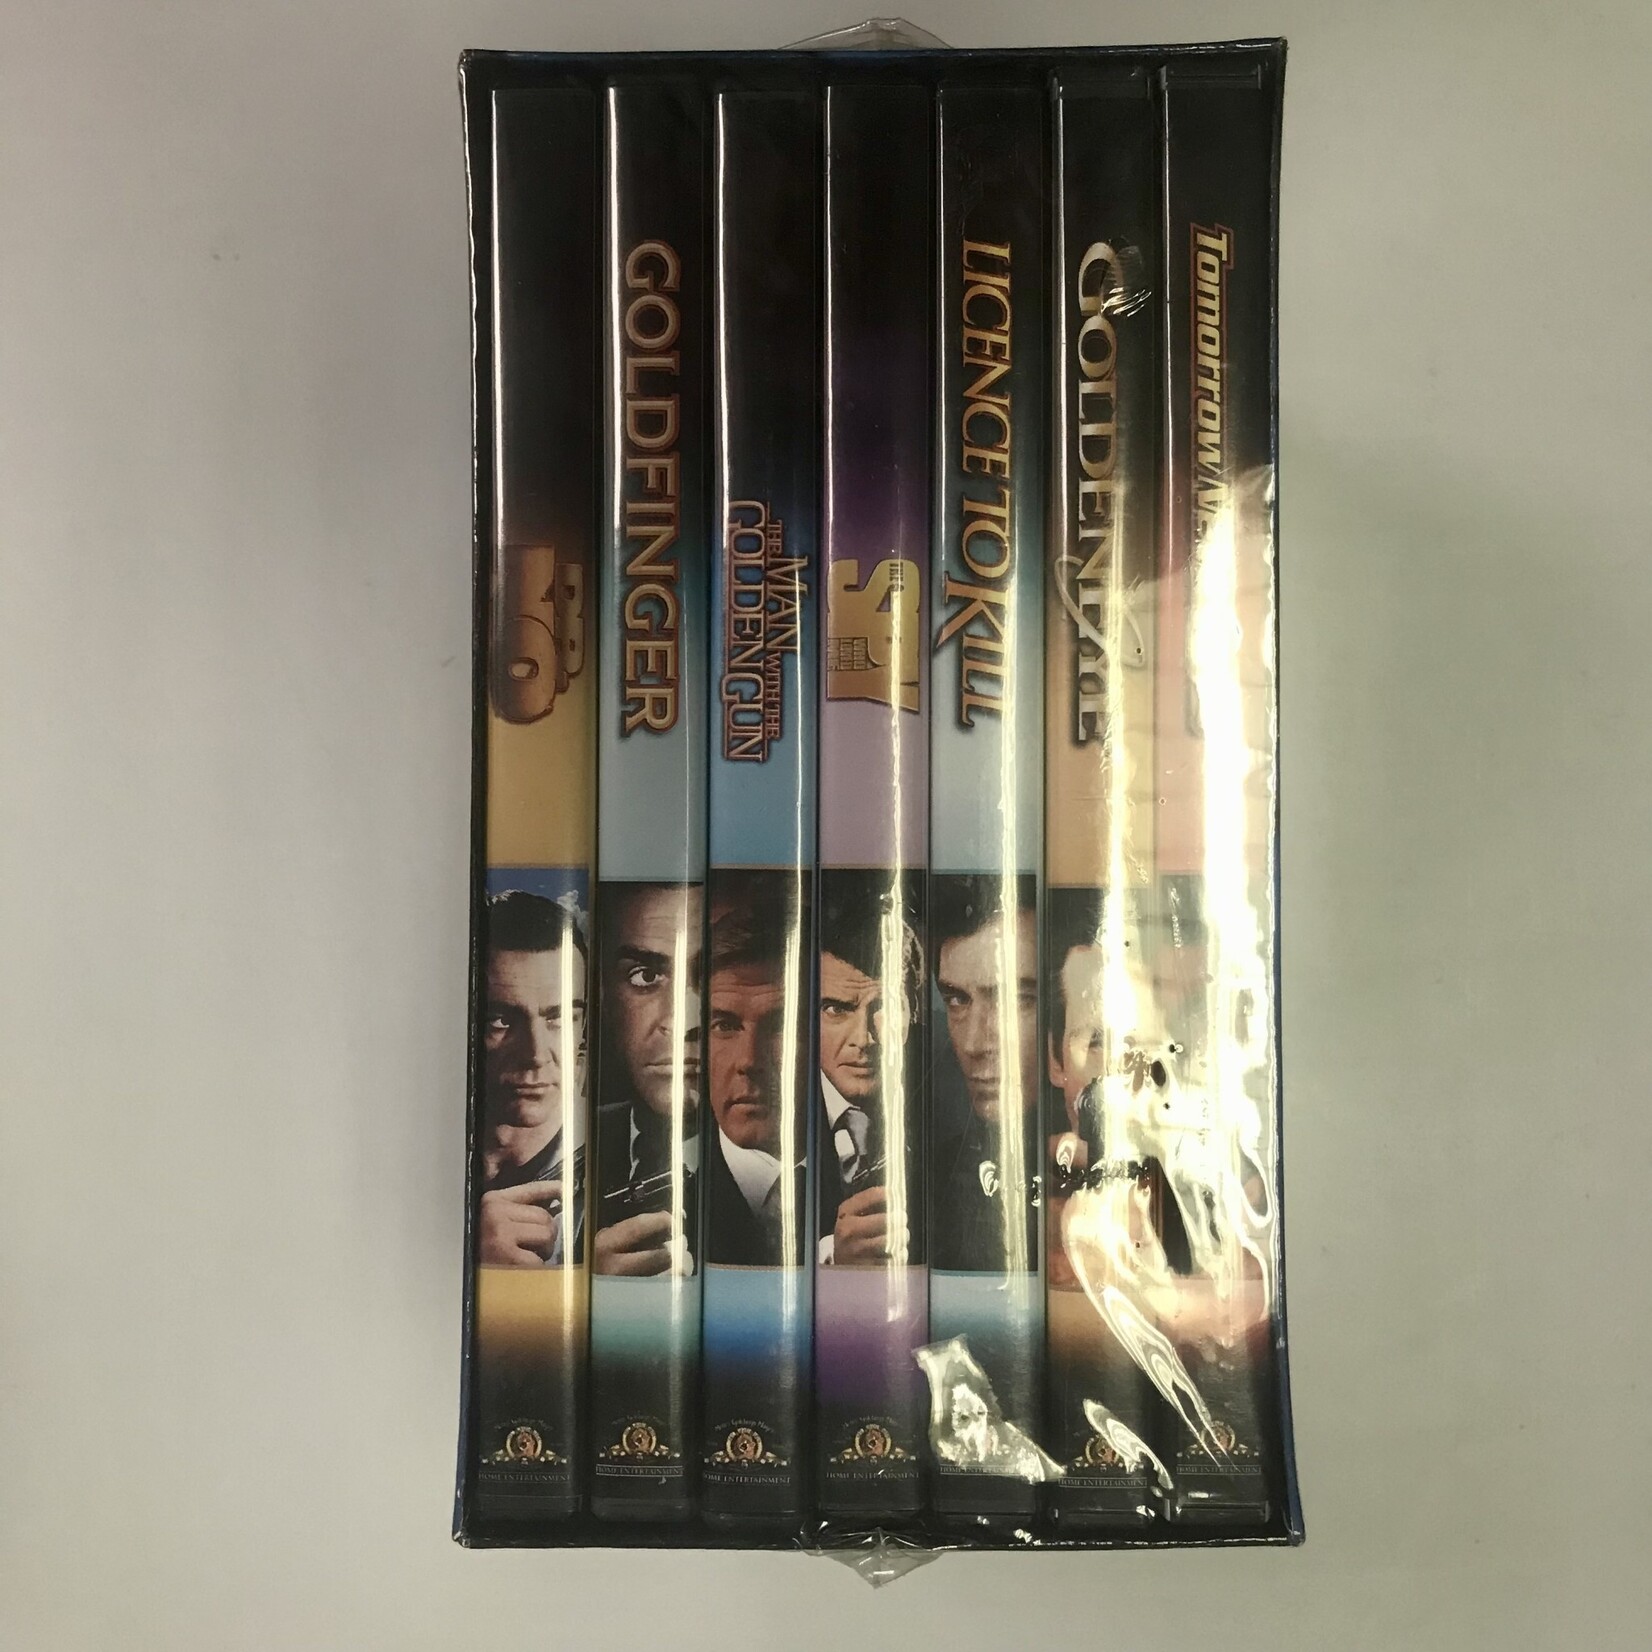 James Bond — 007 Special Edition Volume 1 - DVD Box Set (USED - SEALED)